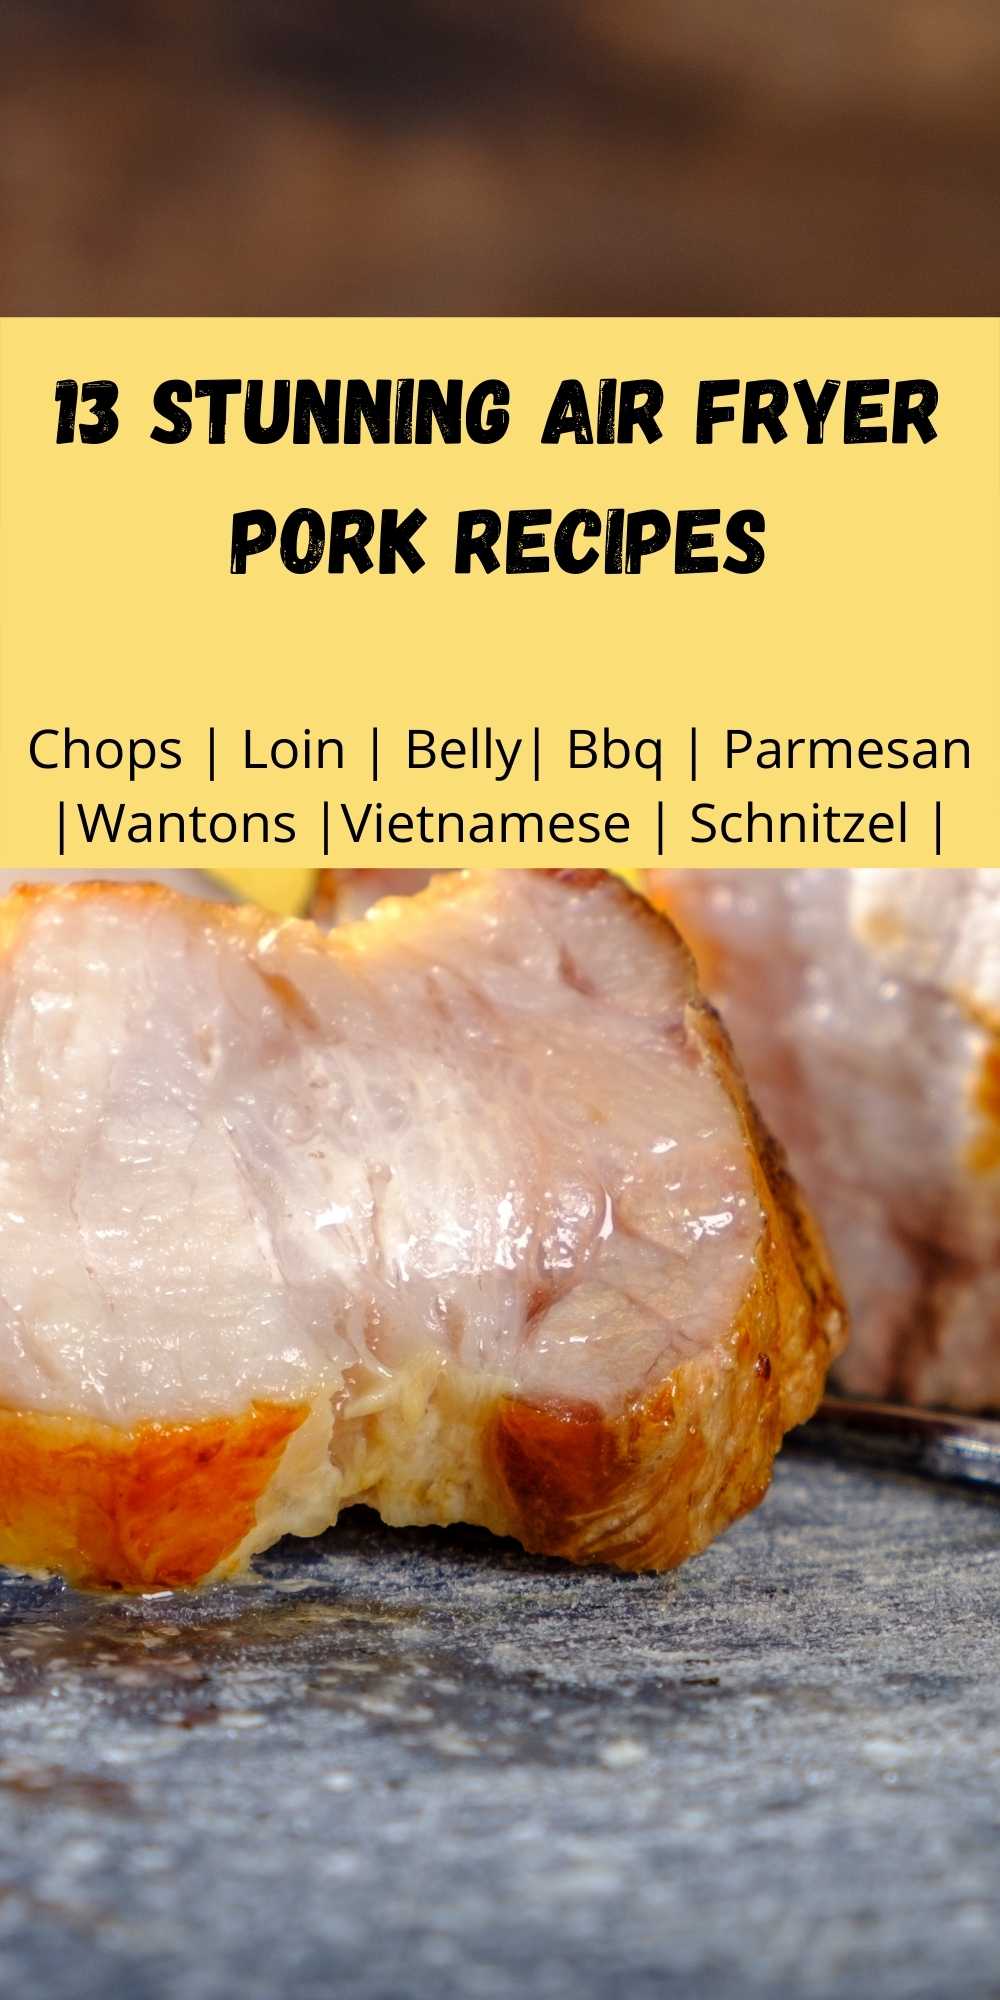 Advert for Air Fryer Pork recipes showing a slice of pork with crispy crackling skin